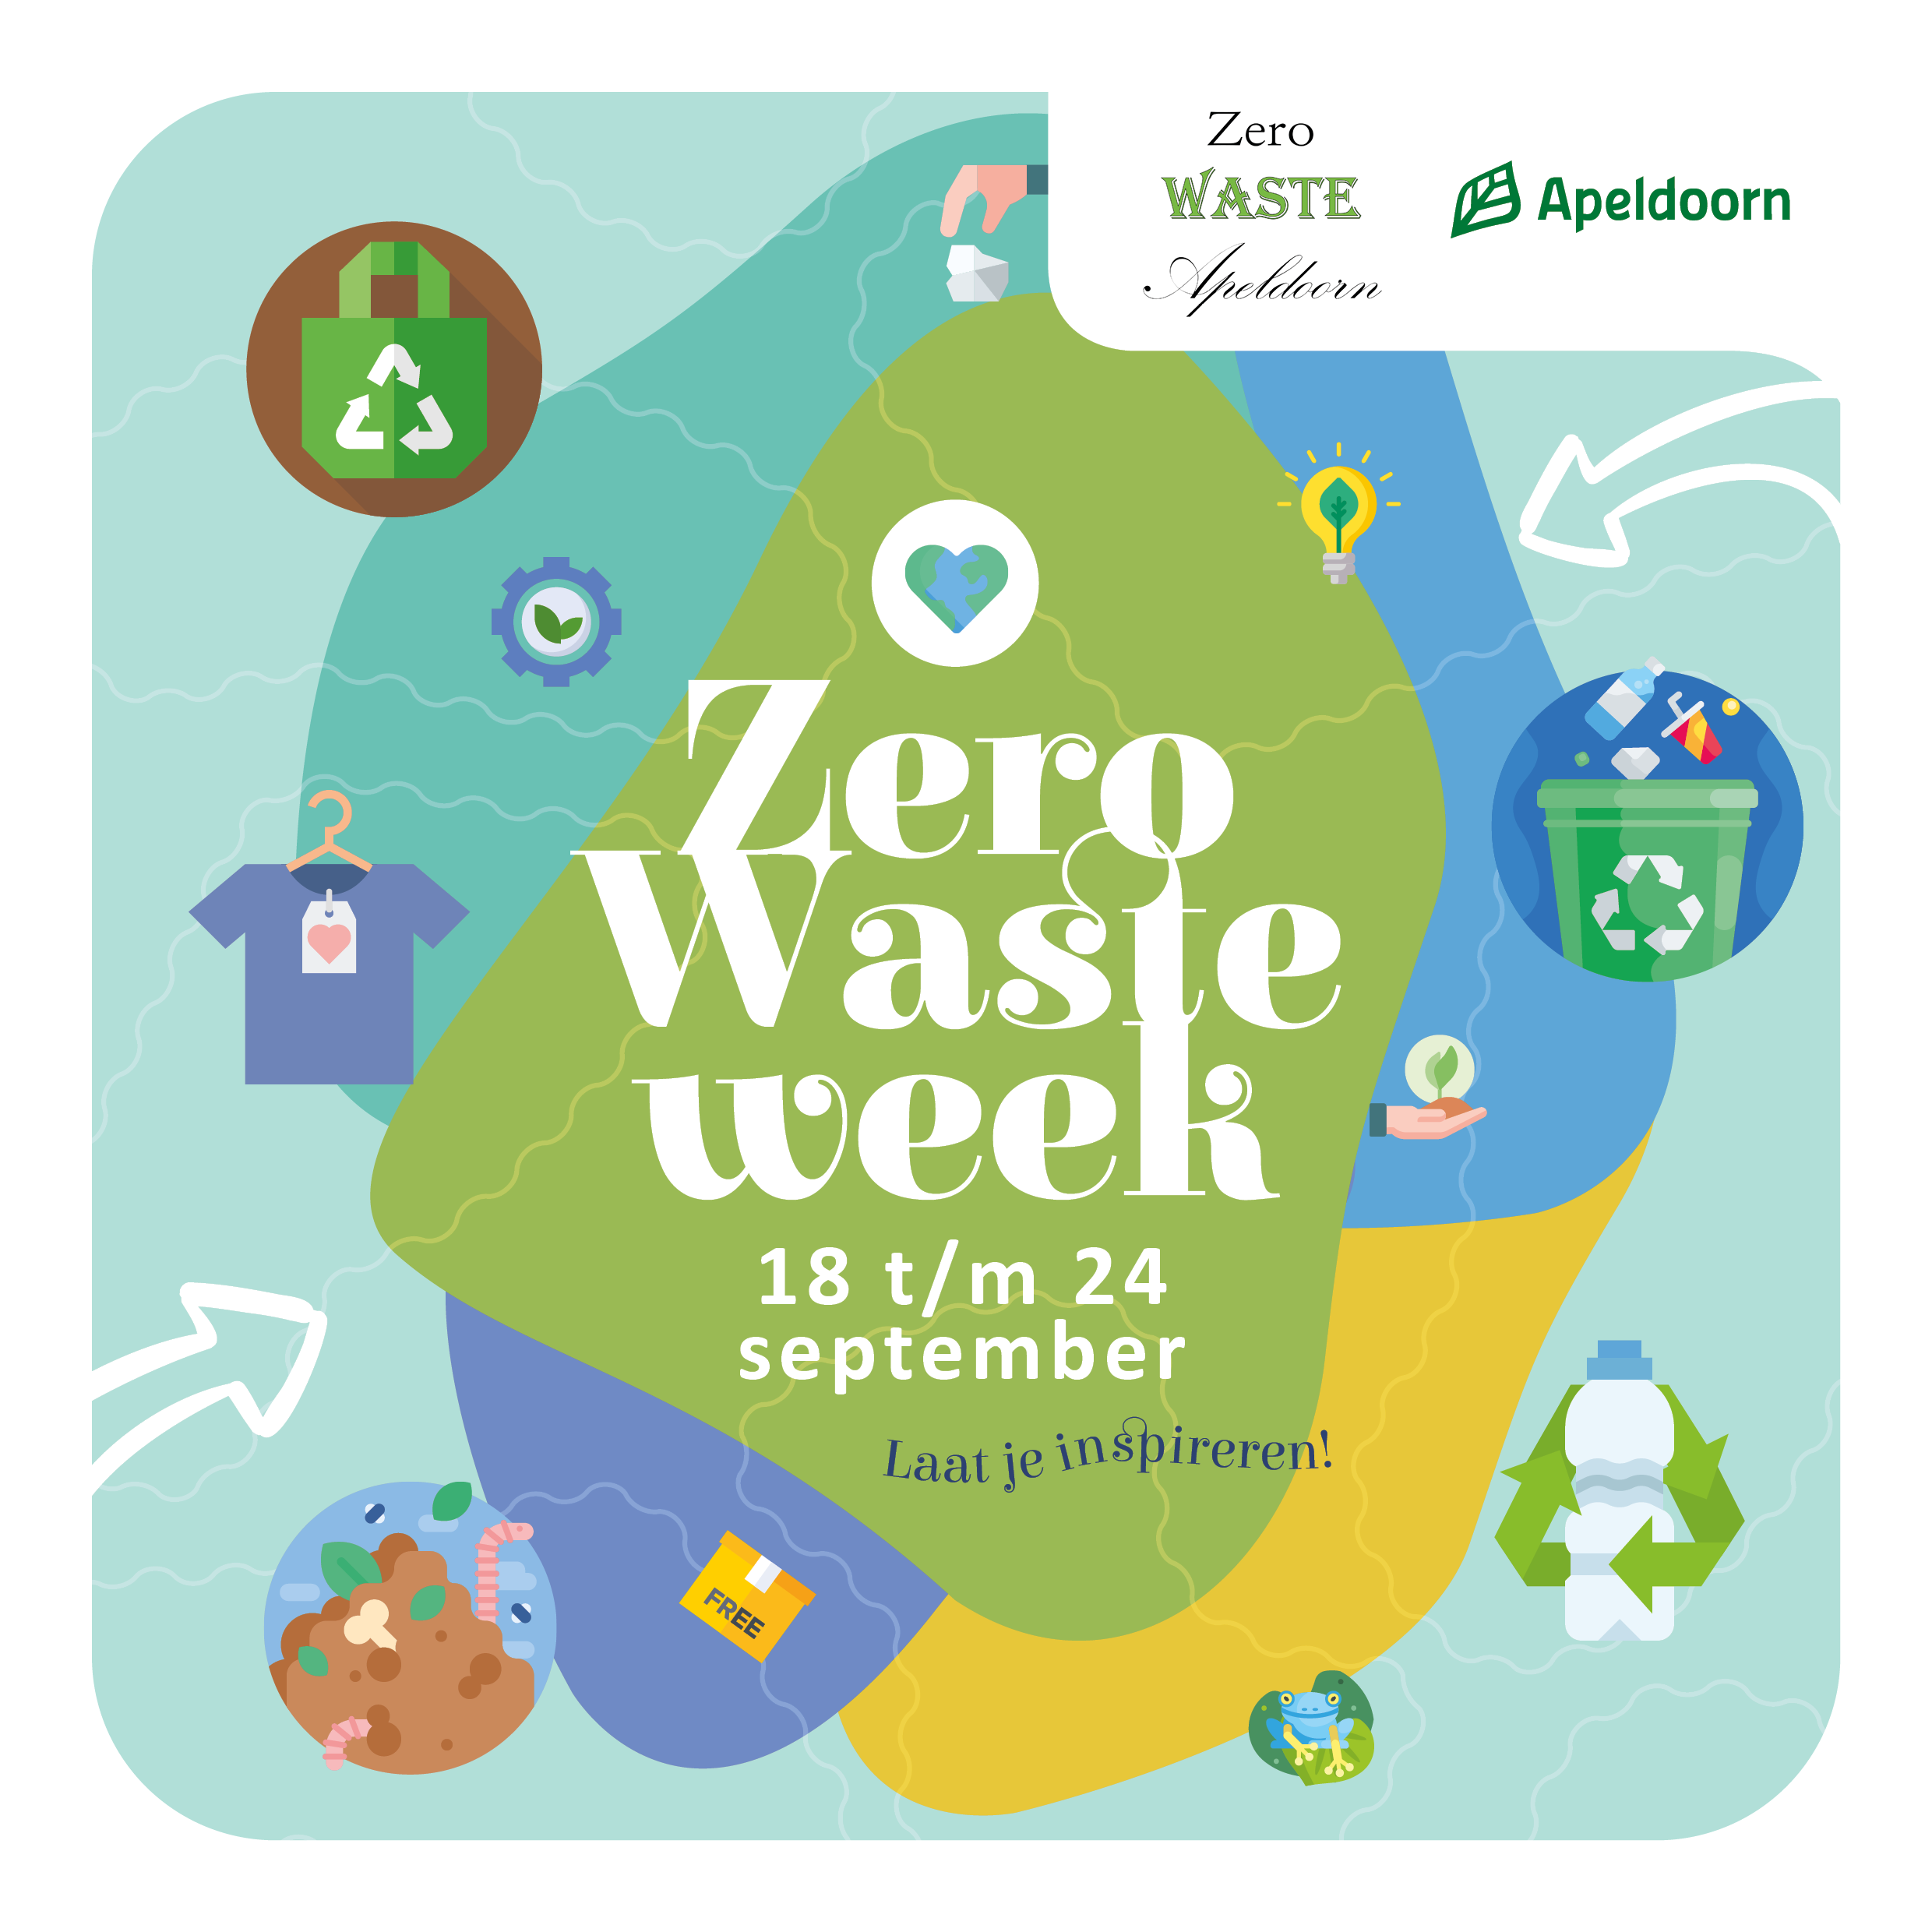 Apeldoorn is Zero Waste and Waste Free